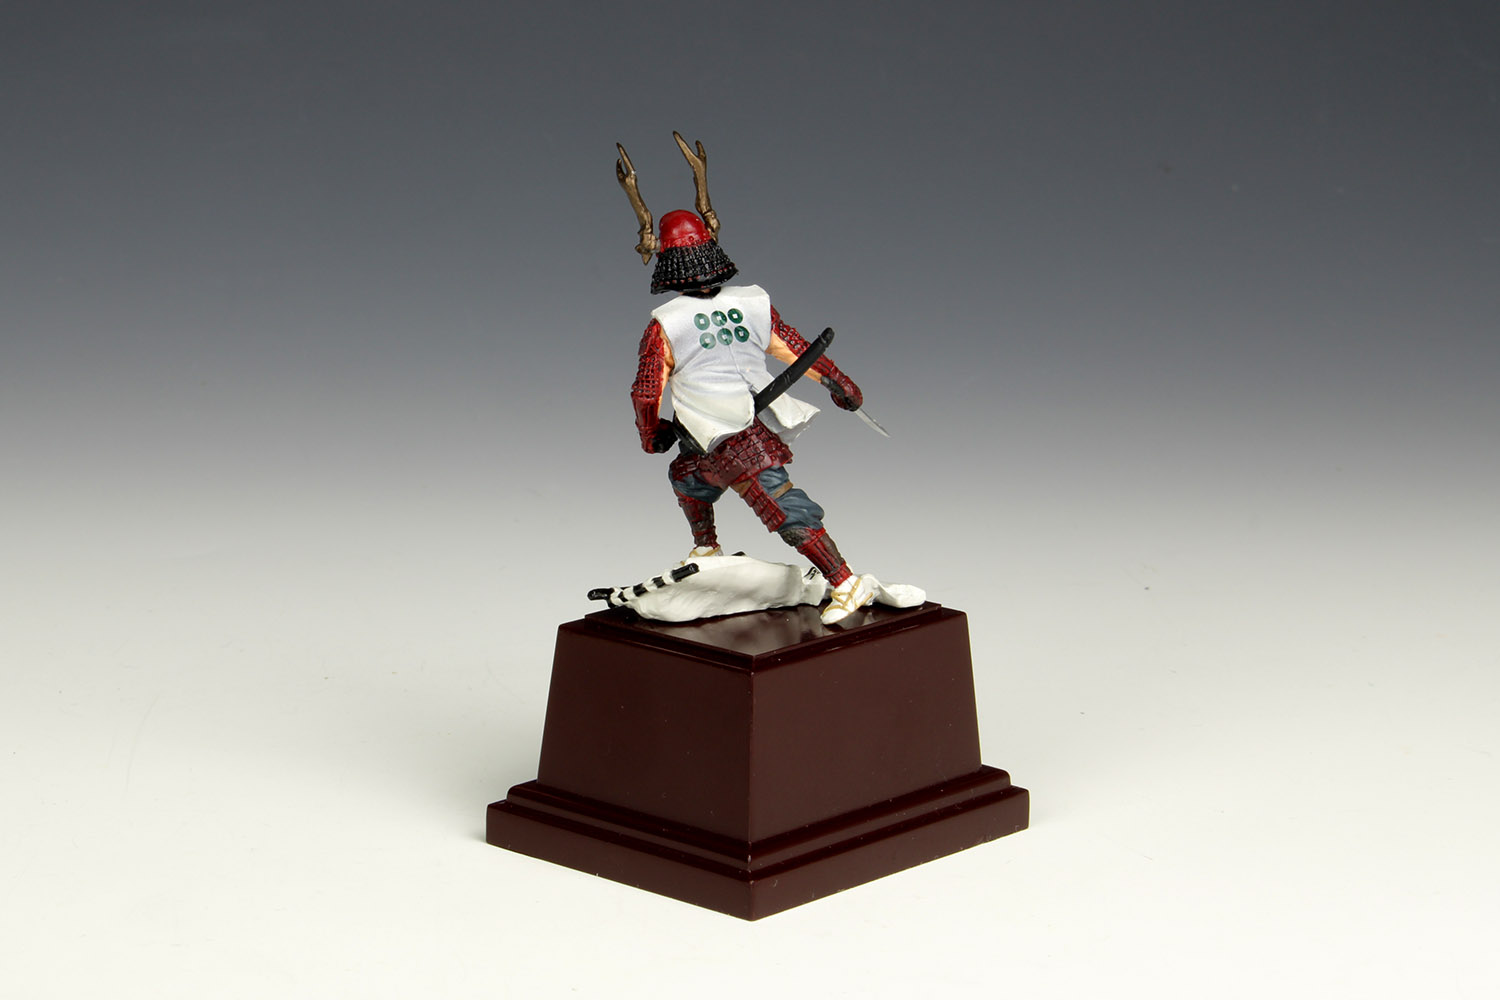 Sengoku Period Warlord Figures Collection